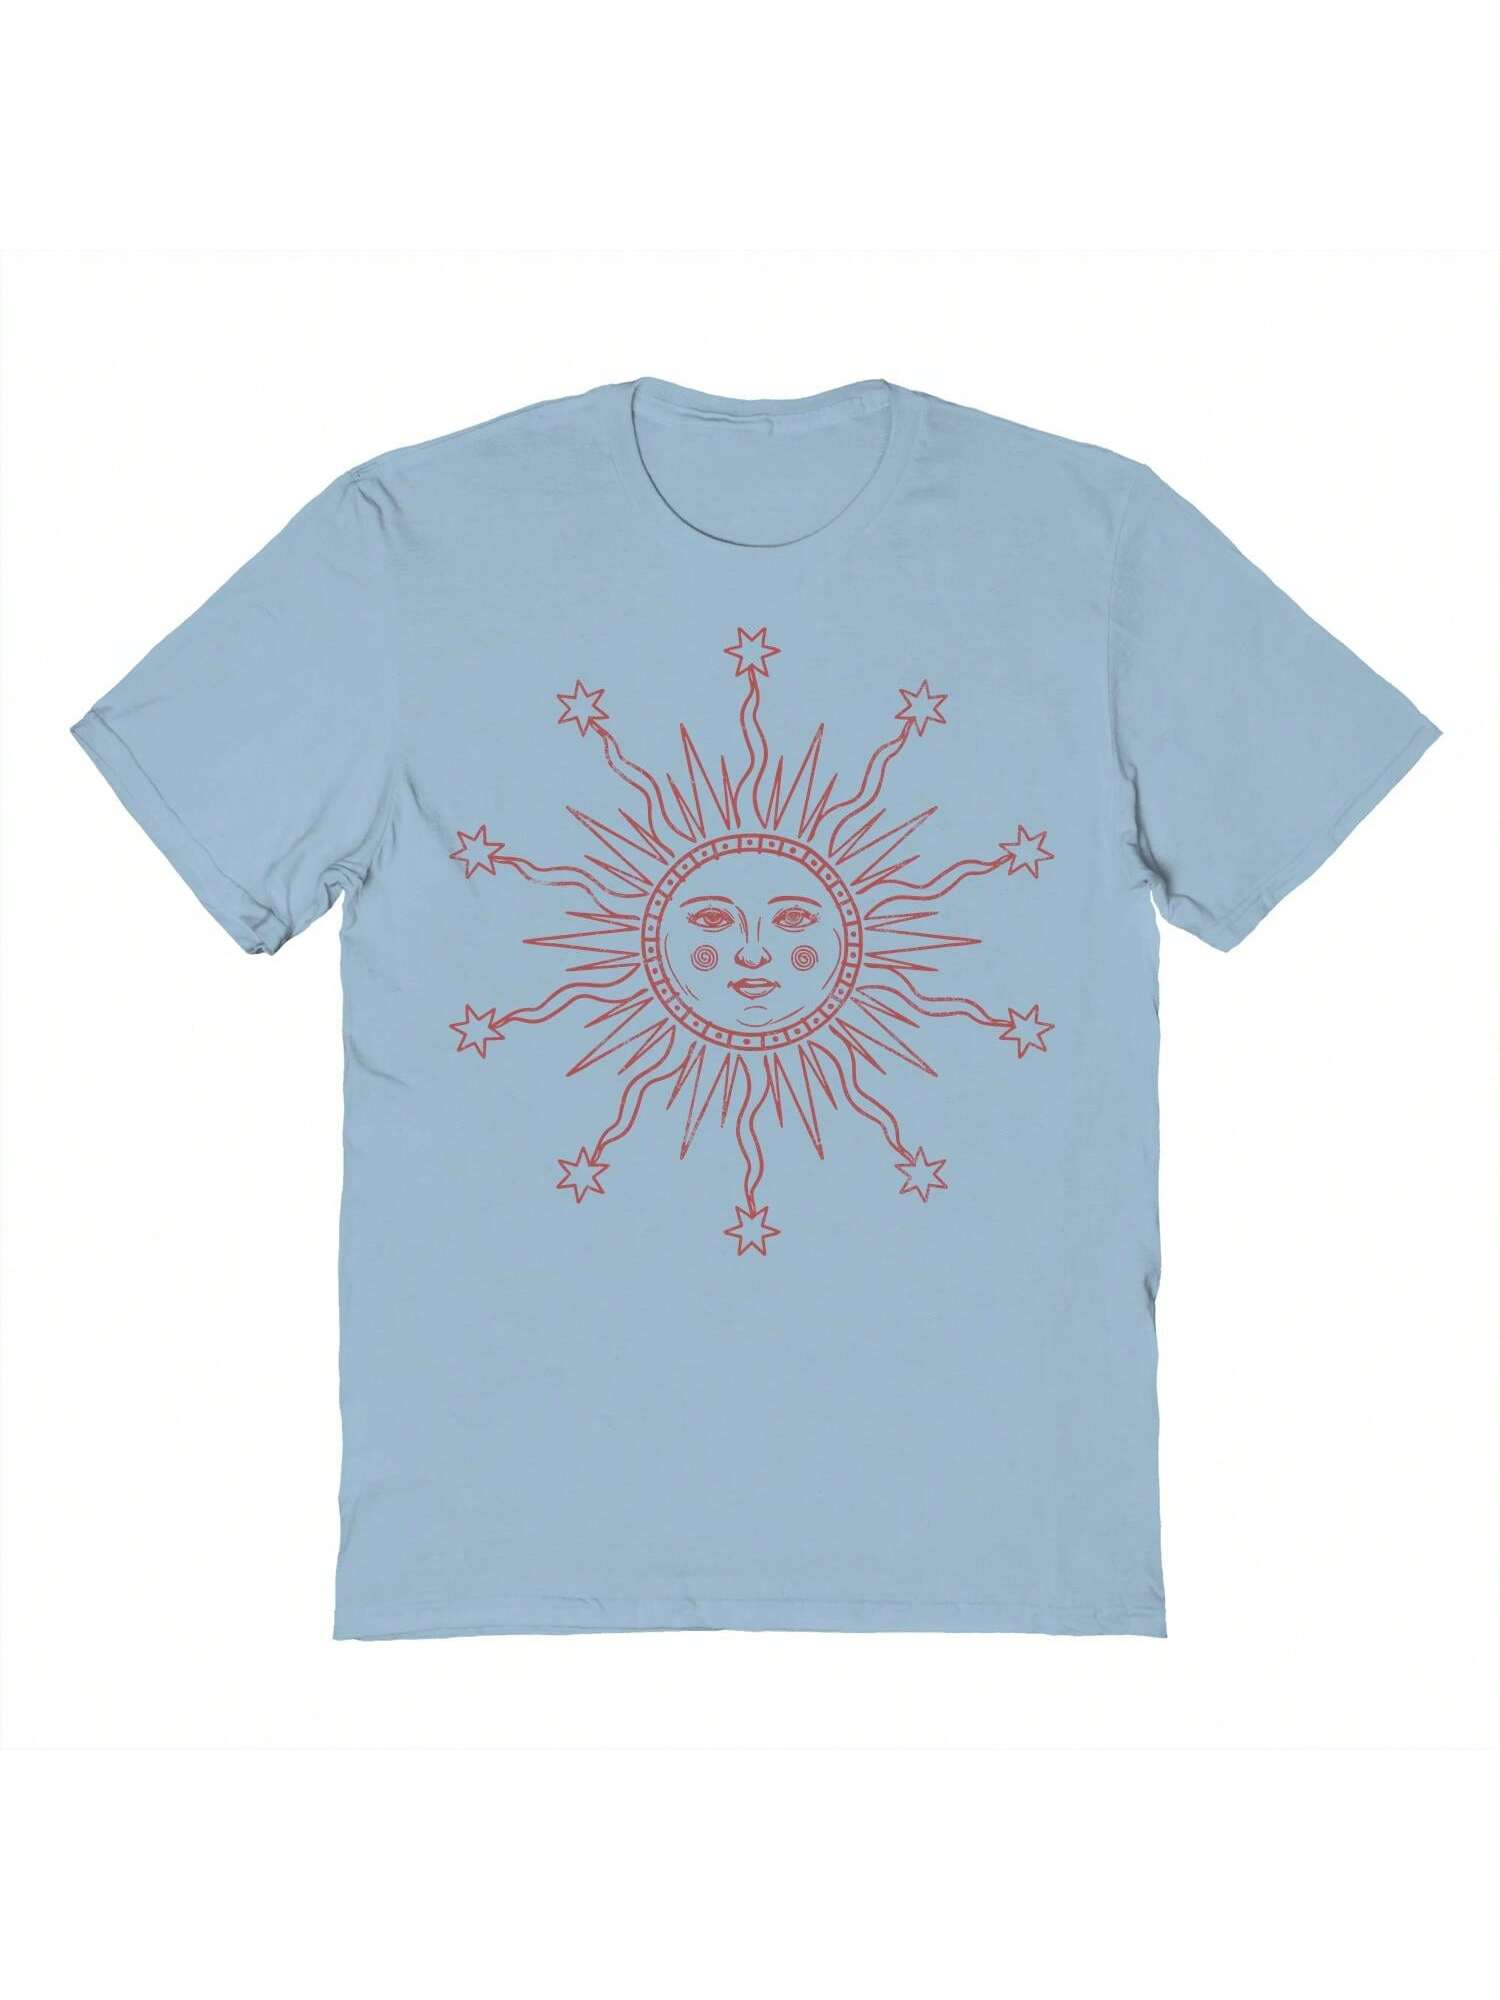 Хлопковая футболка унисекс с короткими рукавами Nearly There Sun Line Work с графикой, голубые